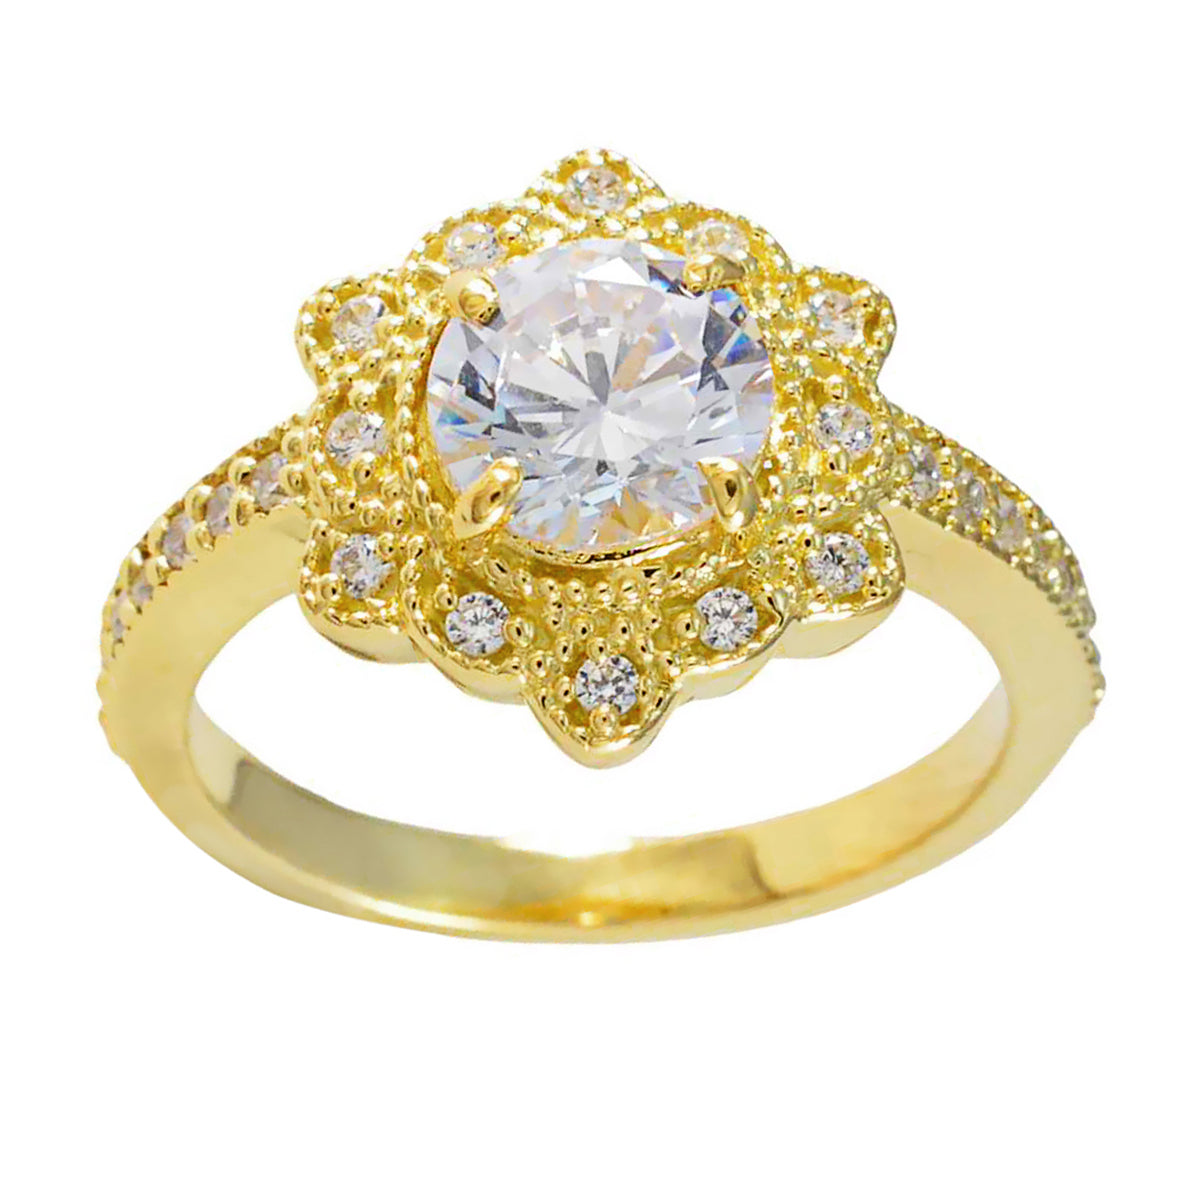 Riyo Custom Silver Ring With Yellow Gold Plating White CZ Stone Round Shape Prong Setting Bridal Jewelry Graduation Ring